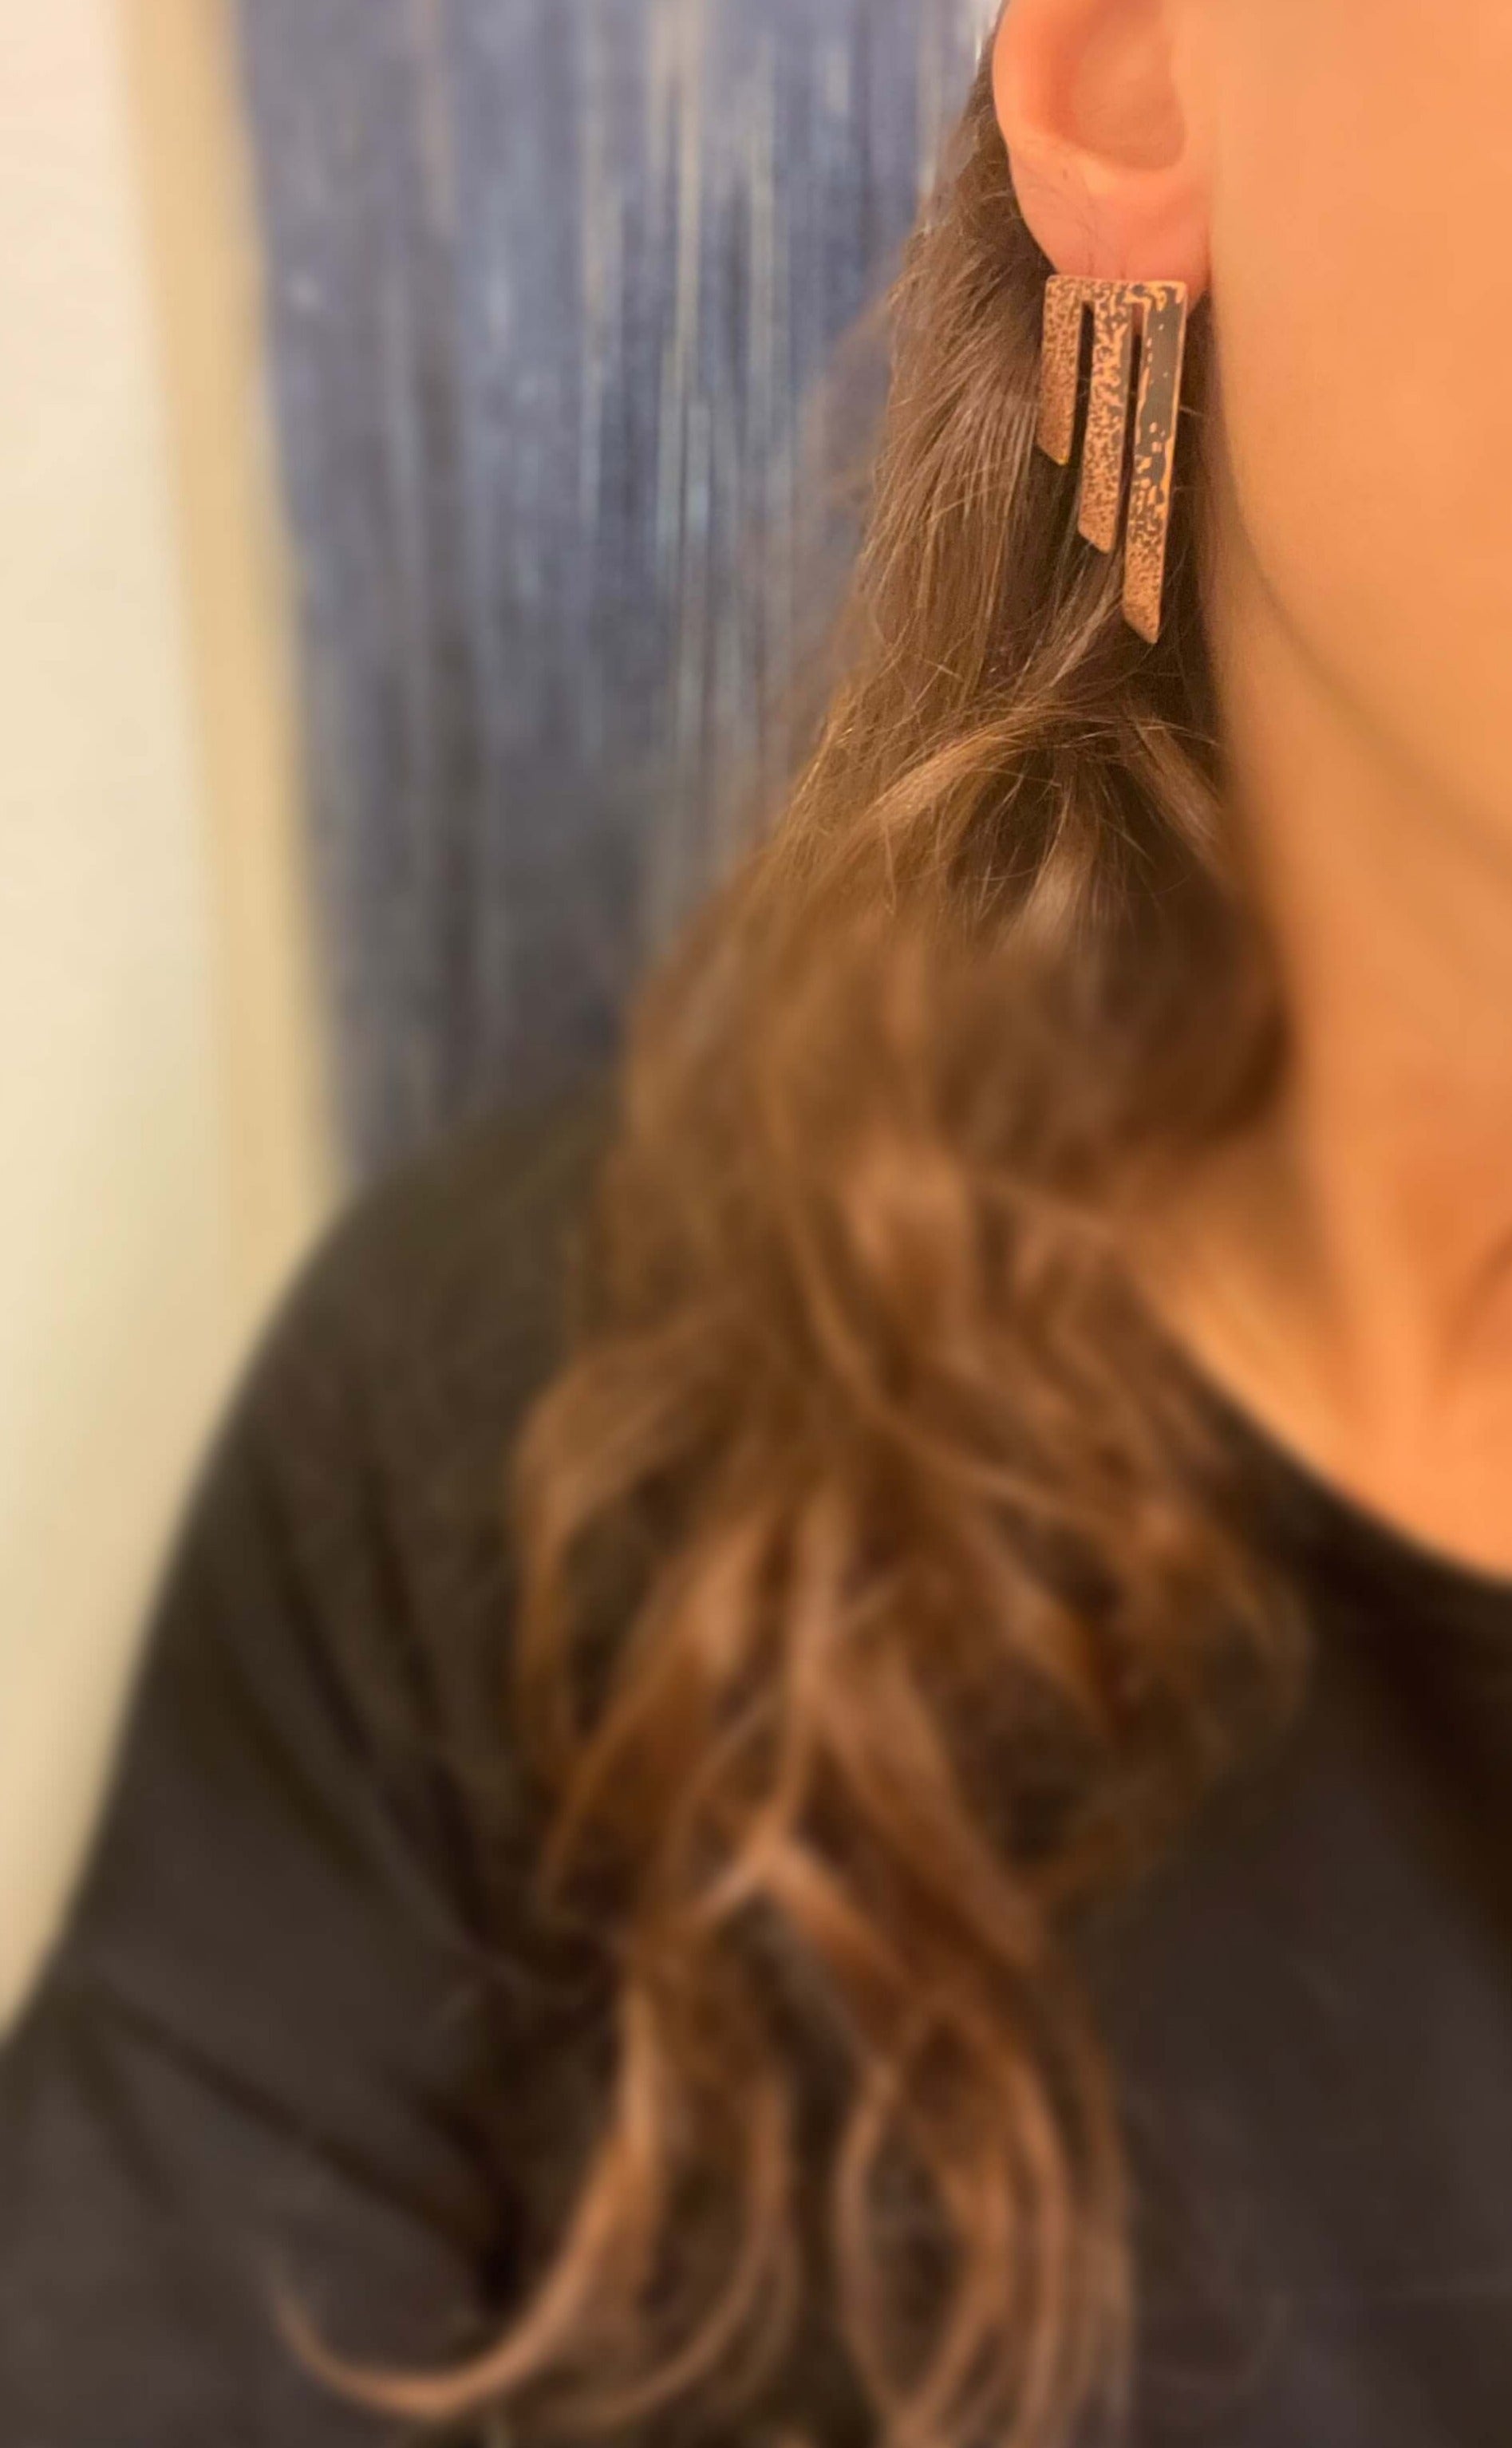 Oxidised copper Earrings | Rose - Black Feathers Earrings - CURIUDO